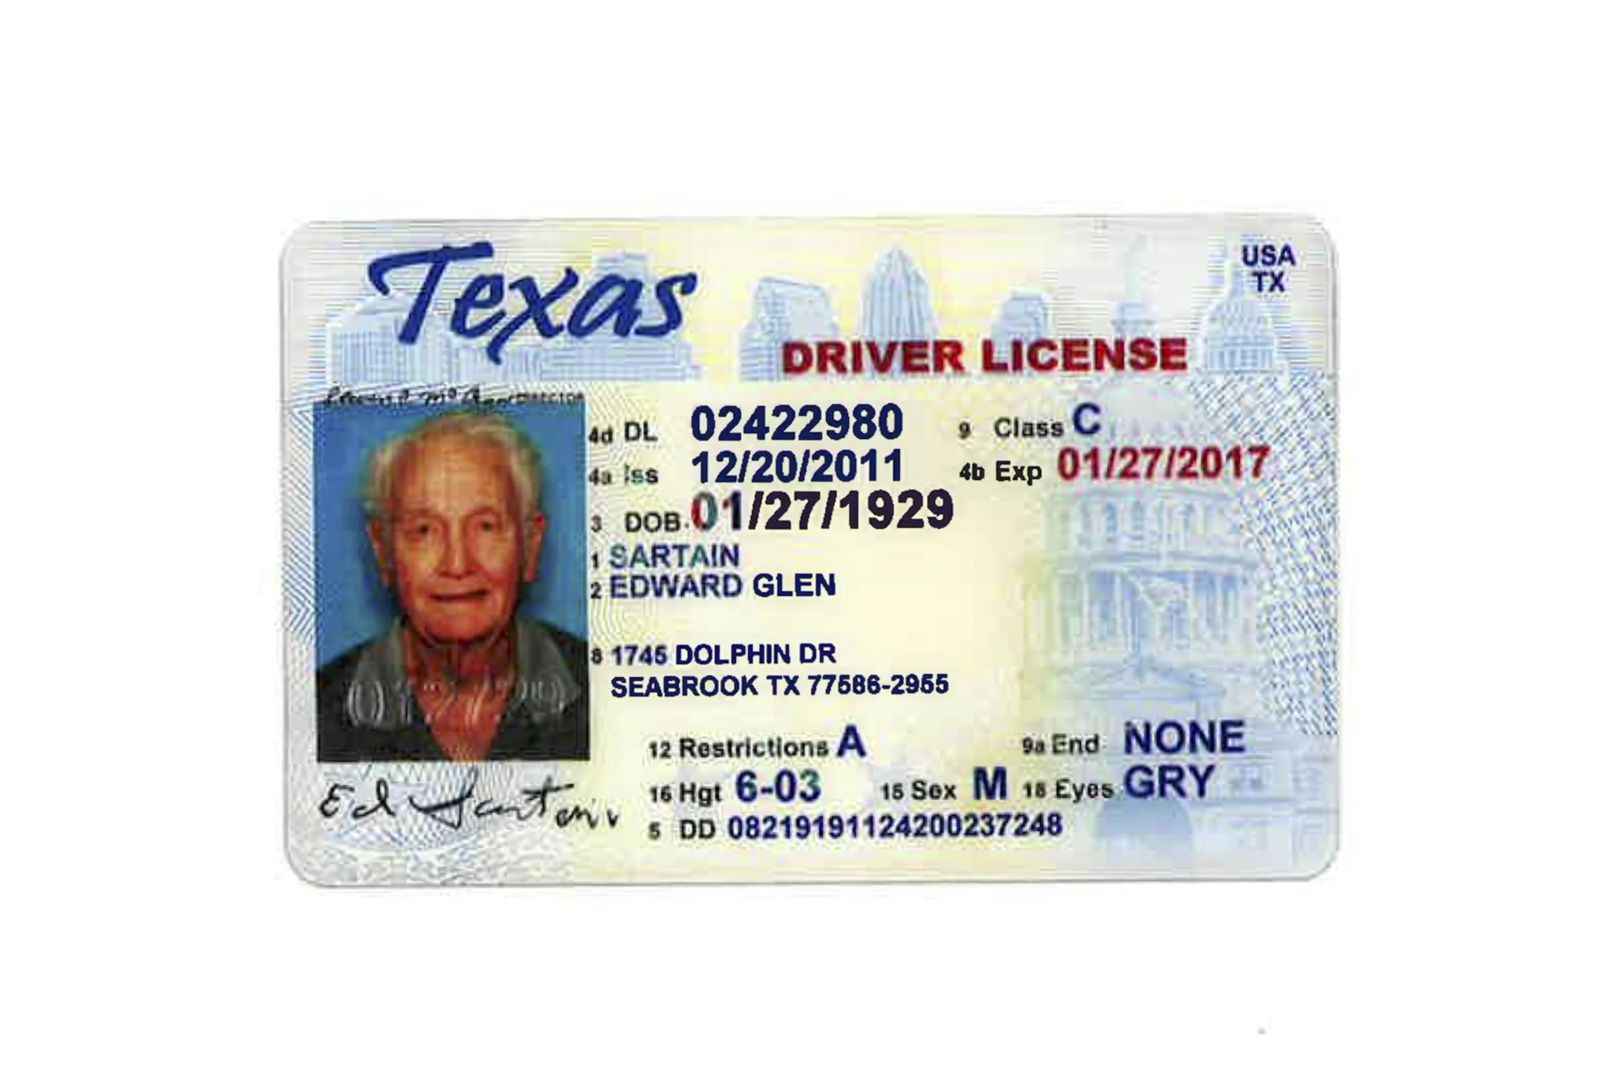 Driver s license. Texas Driver License. Texas Driver License New. License USA.